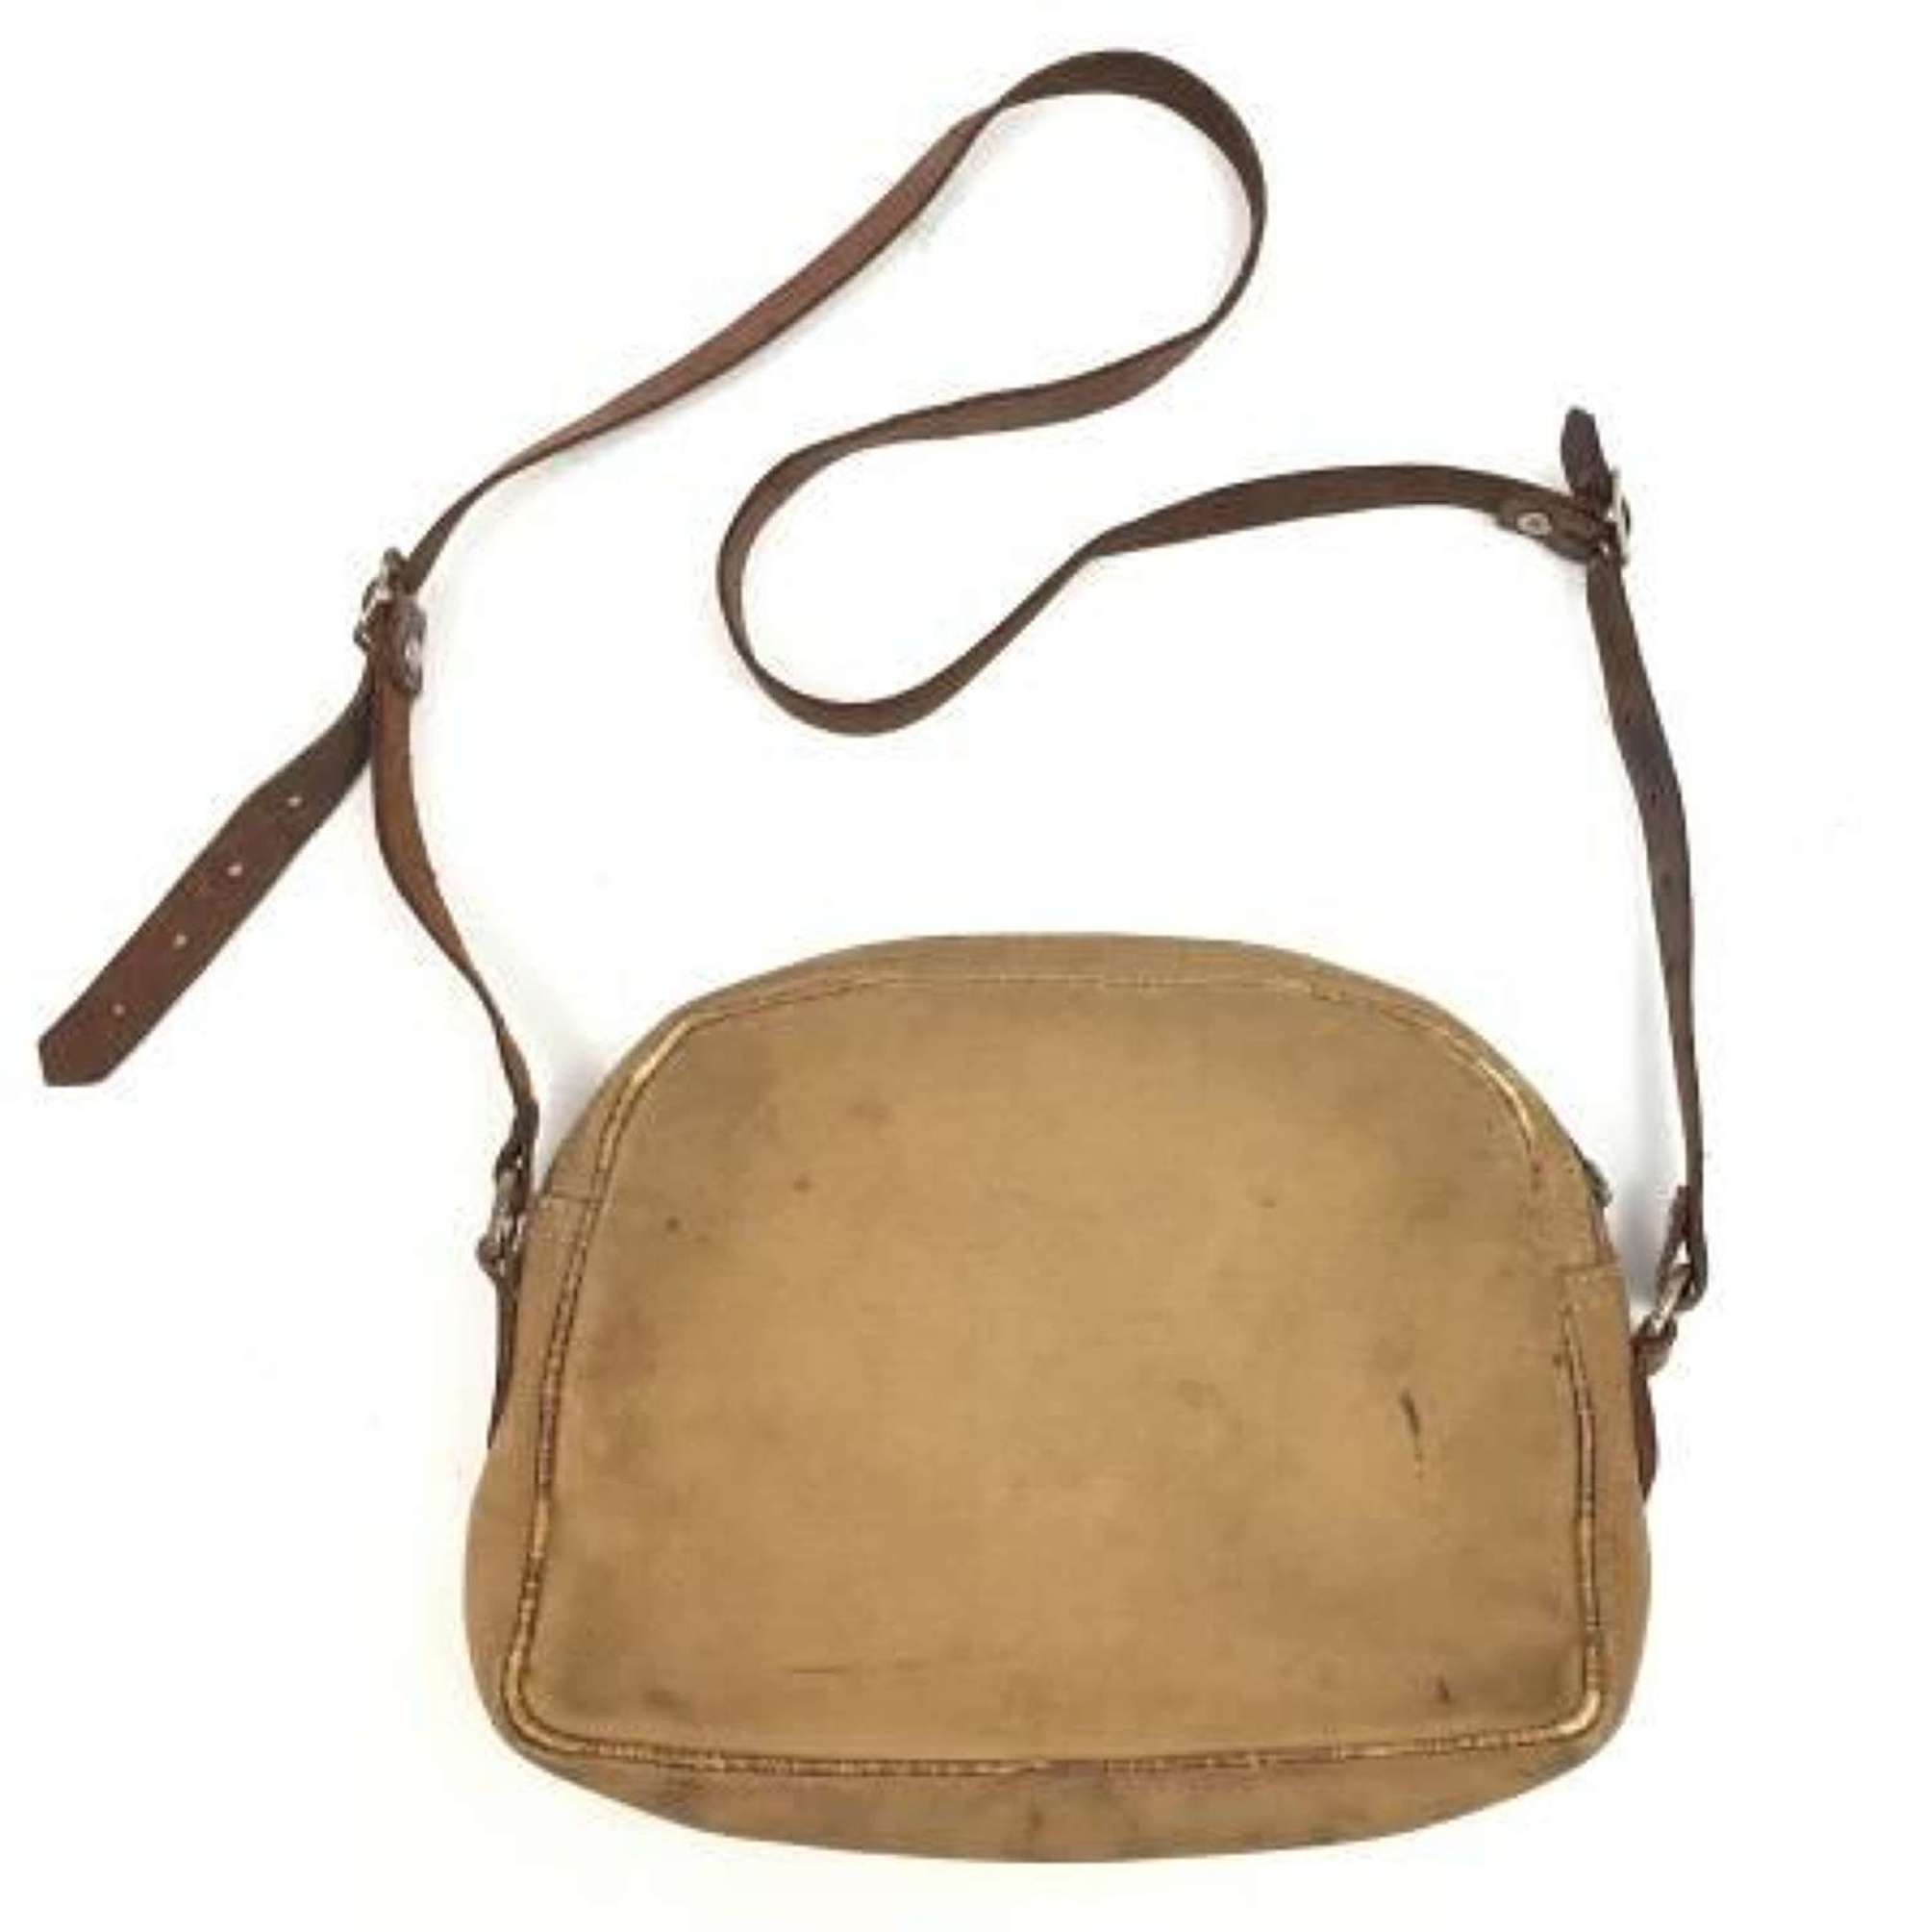 Orignal 1945 Dated ATS Handbag